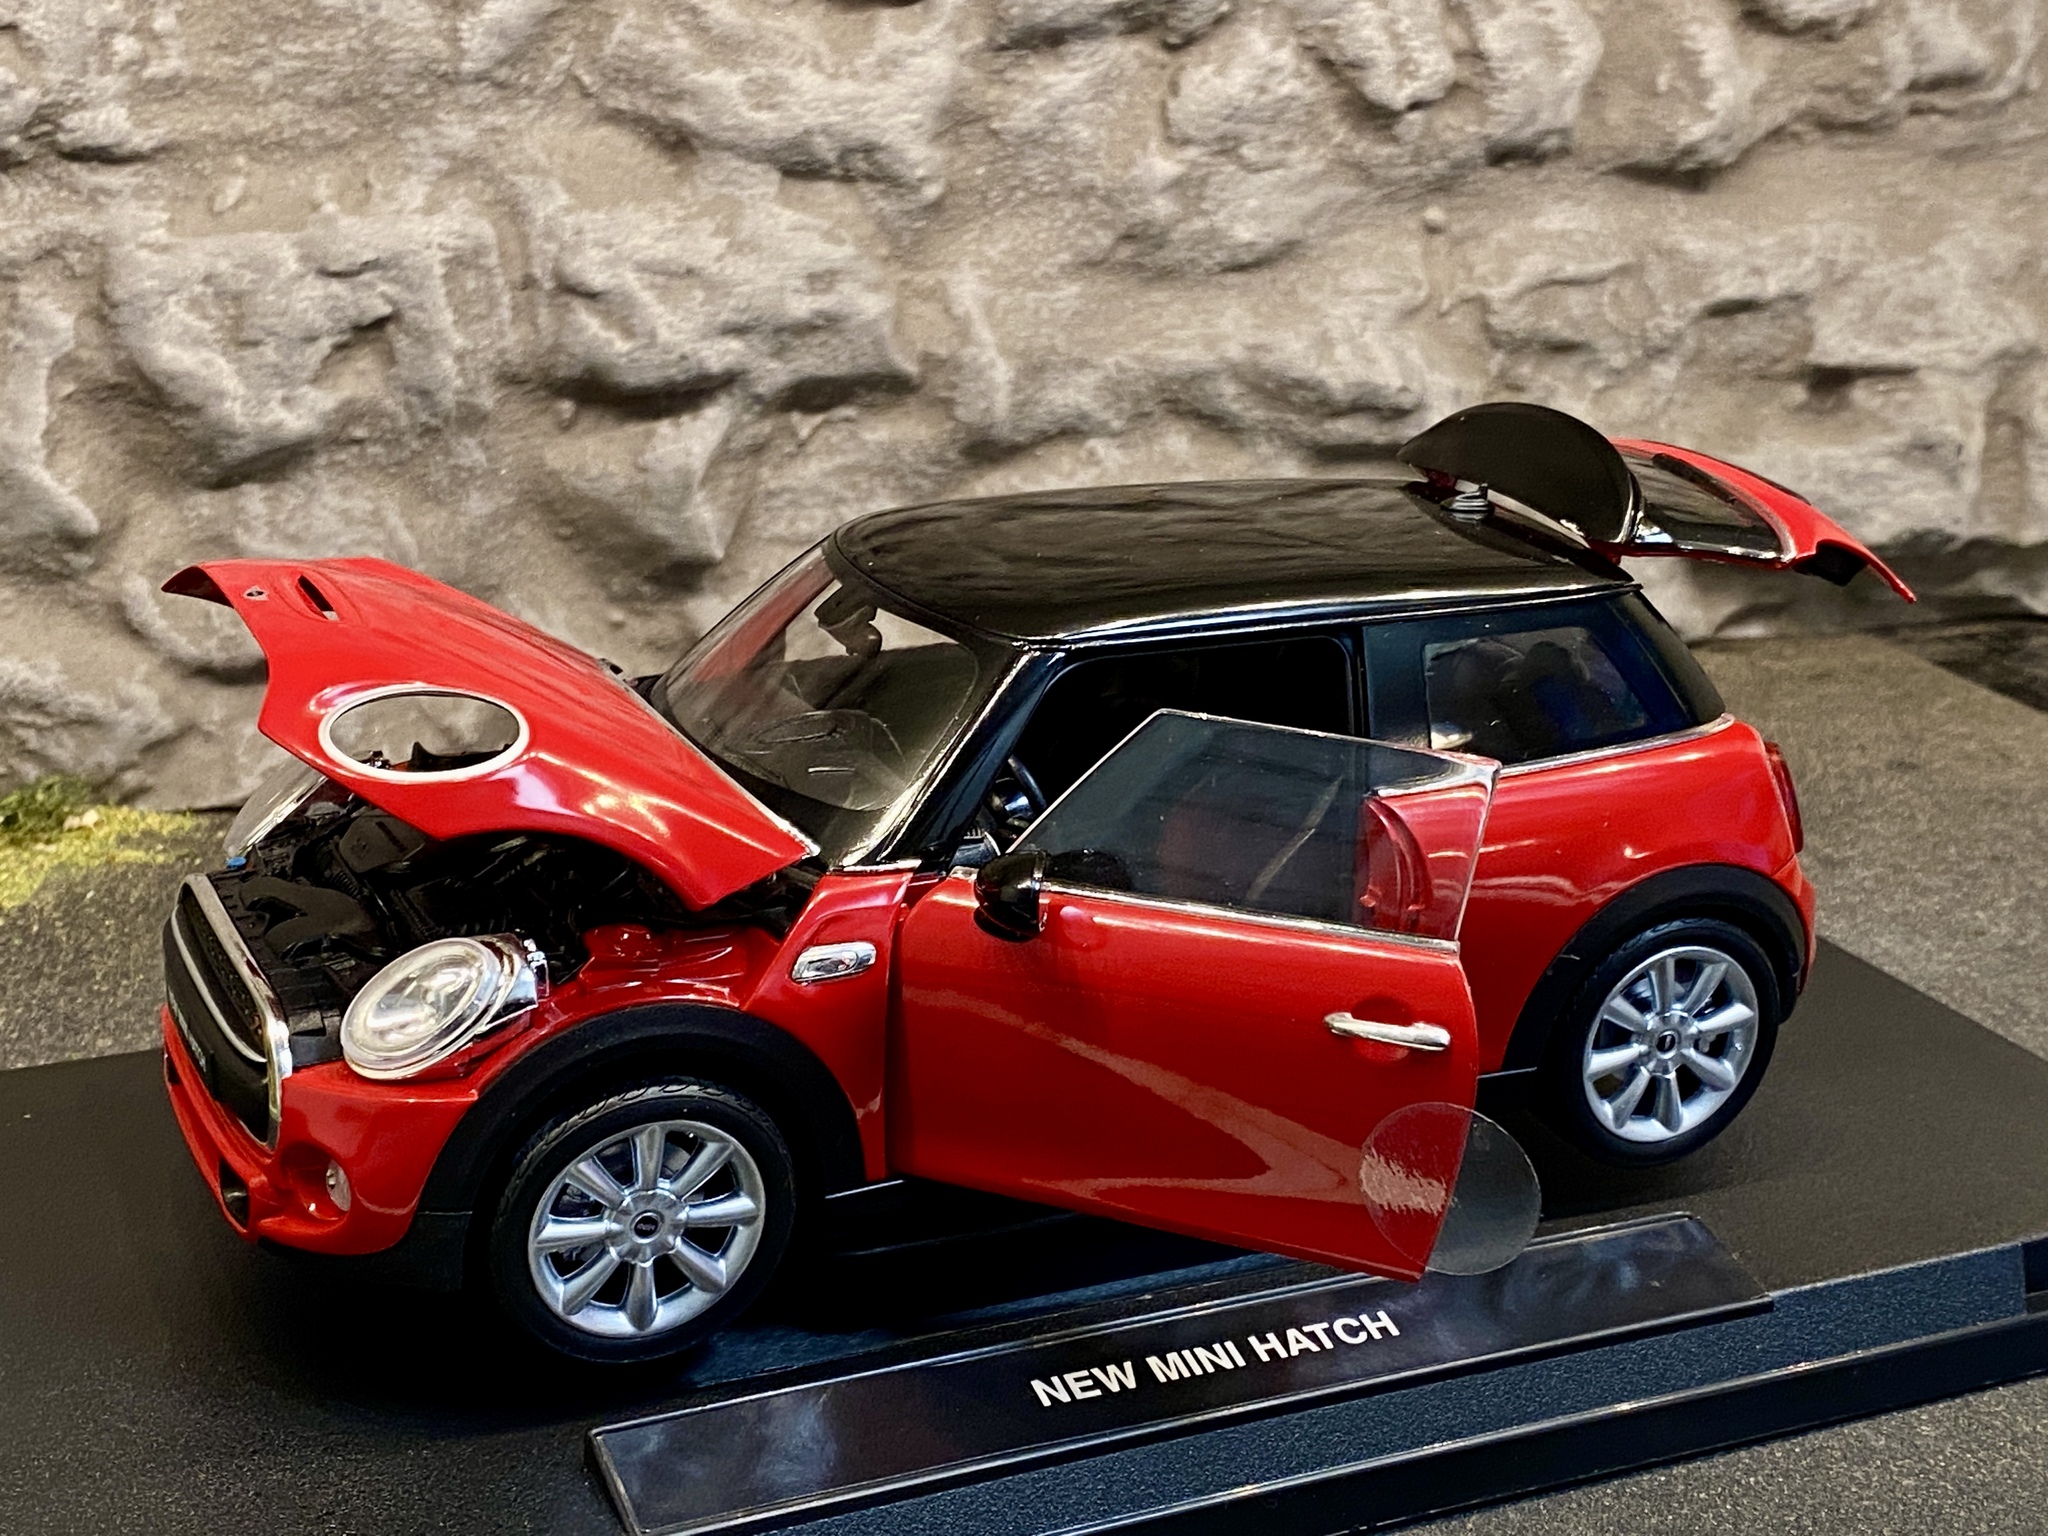 Skala 1/18 New Mini Hatch, Röd m Svart tak från Nex-models/Welly